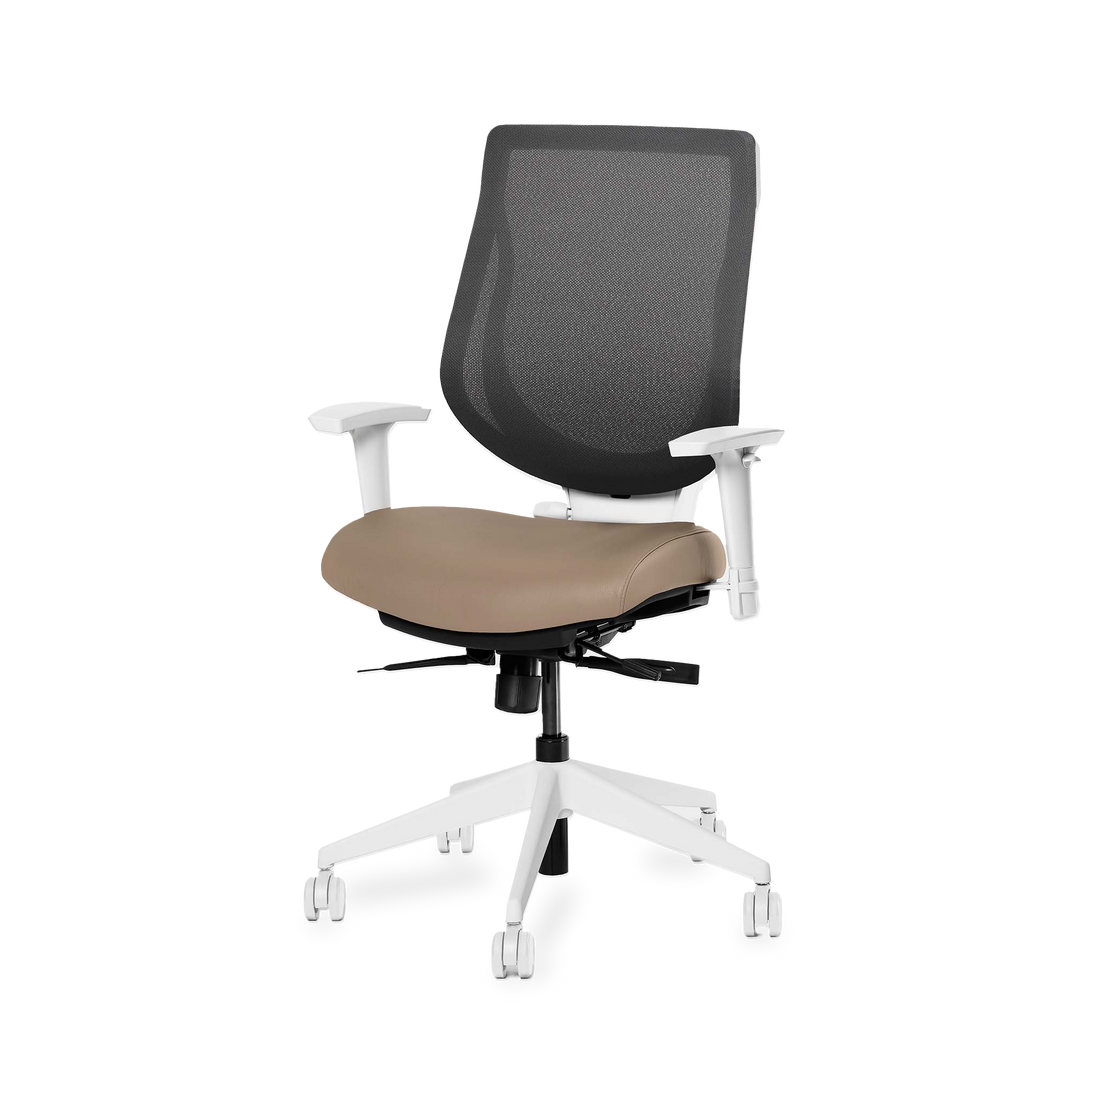 Almost Perfect YouToo ergonomic chair - ergonofis